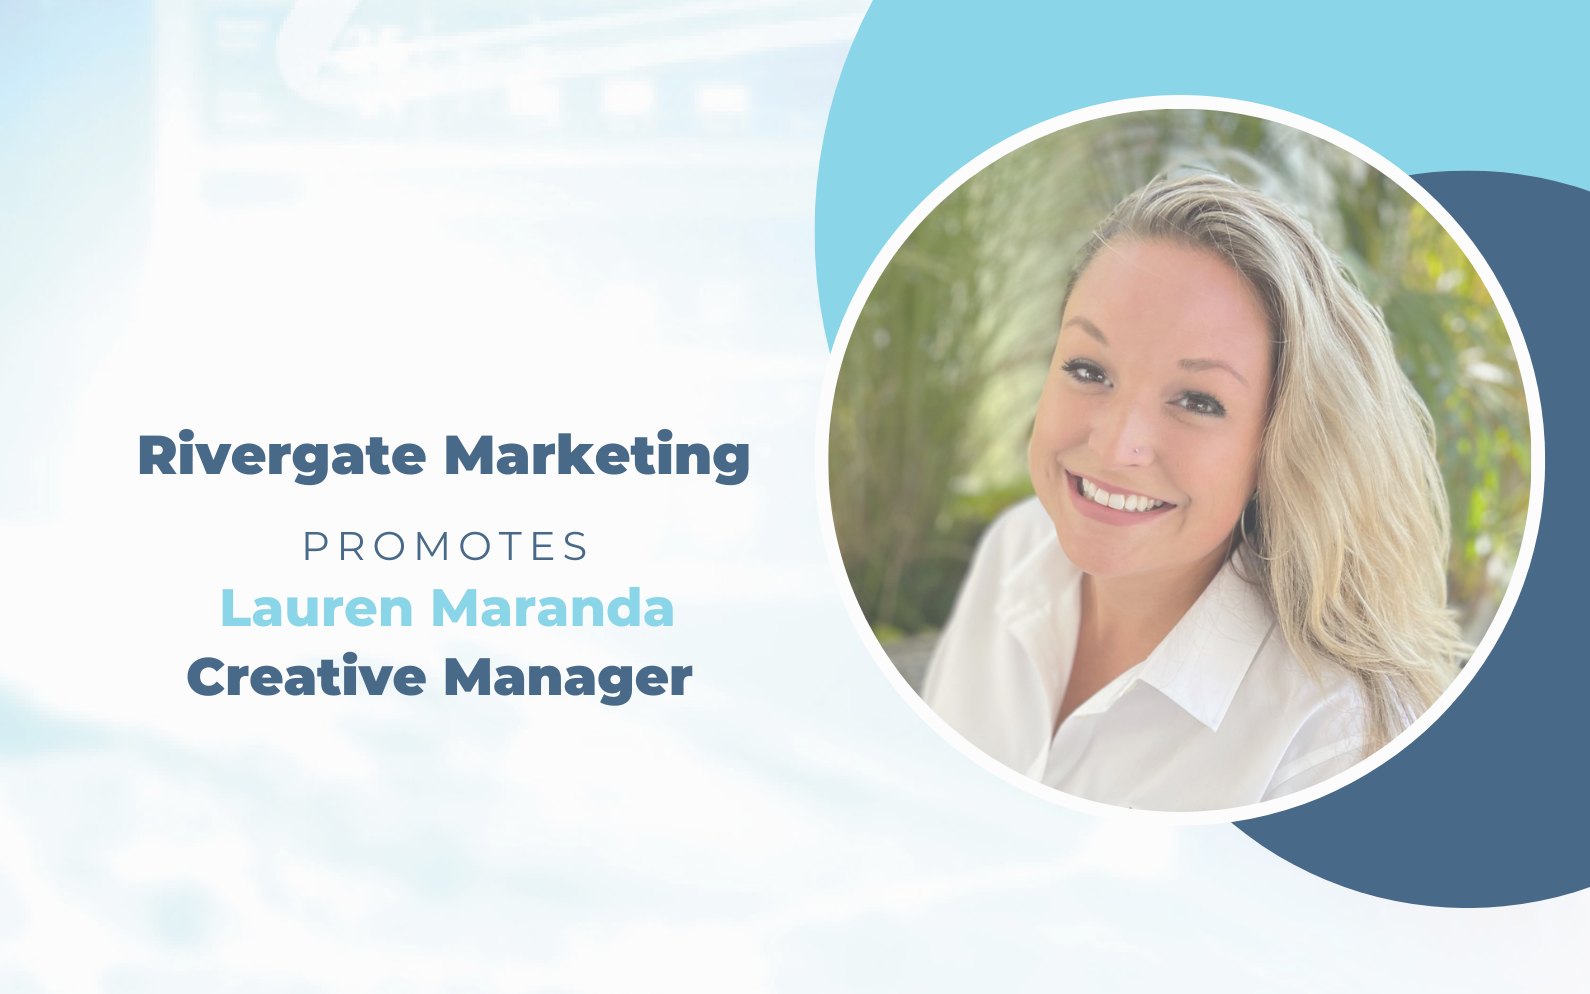 Rivergate Marketing promotes Lauren Maranda to Creative Manager